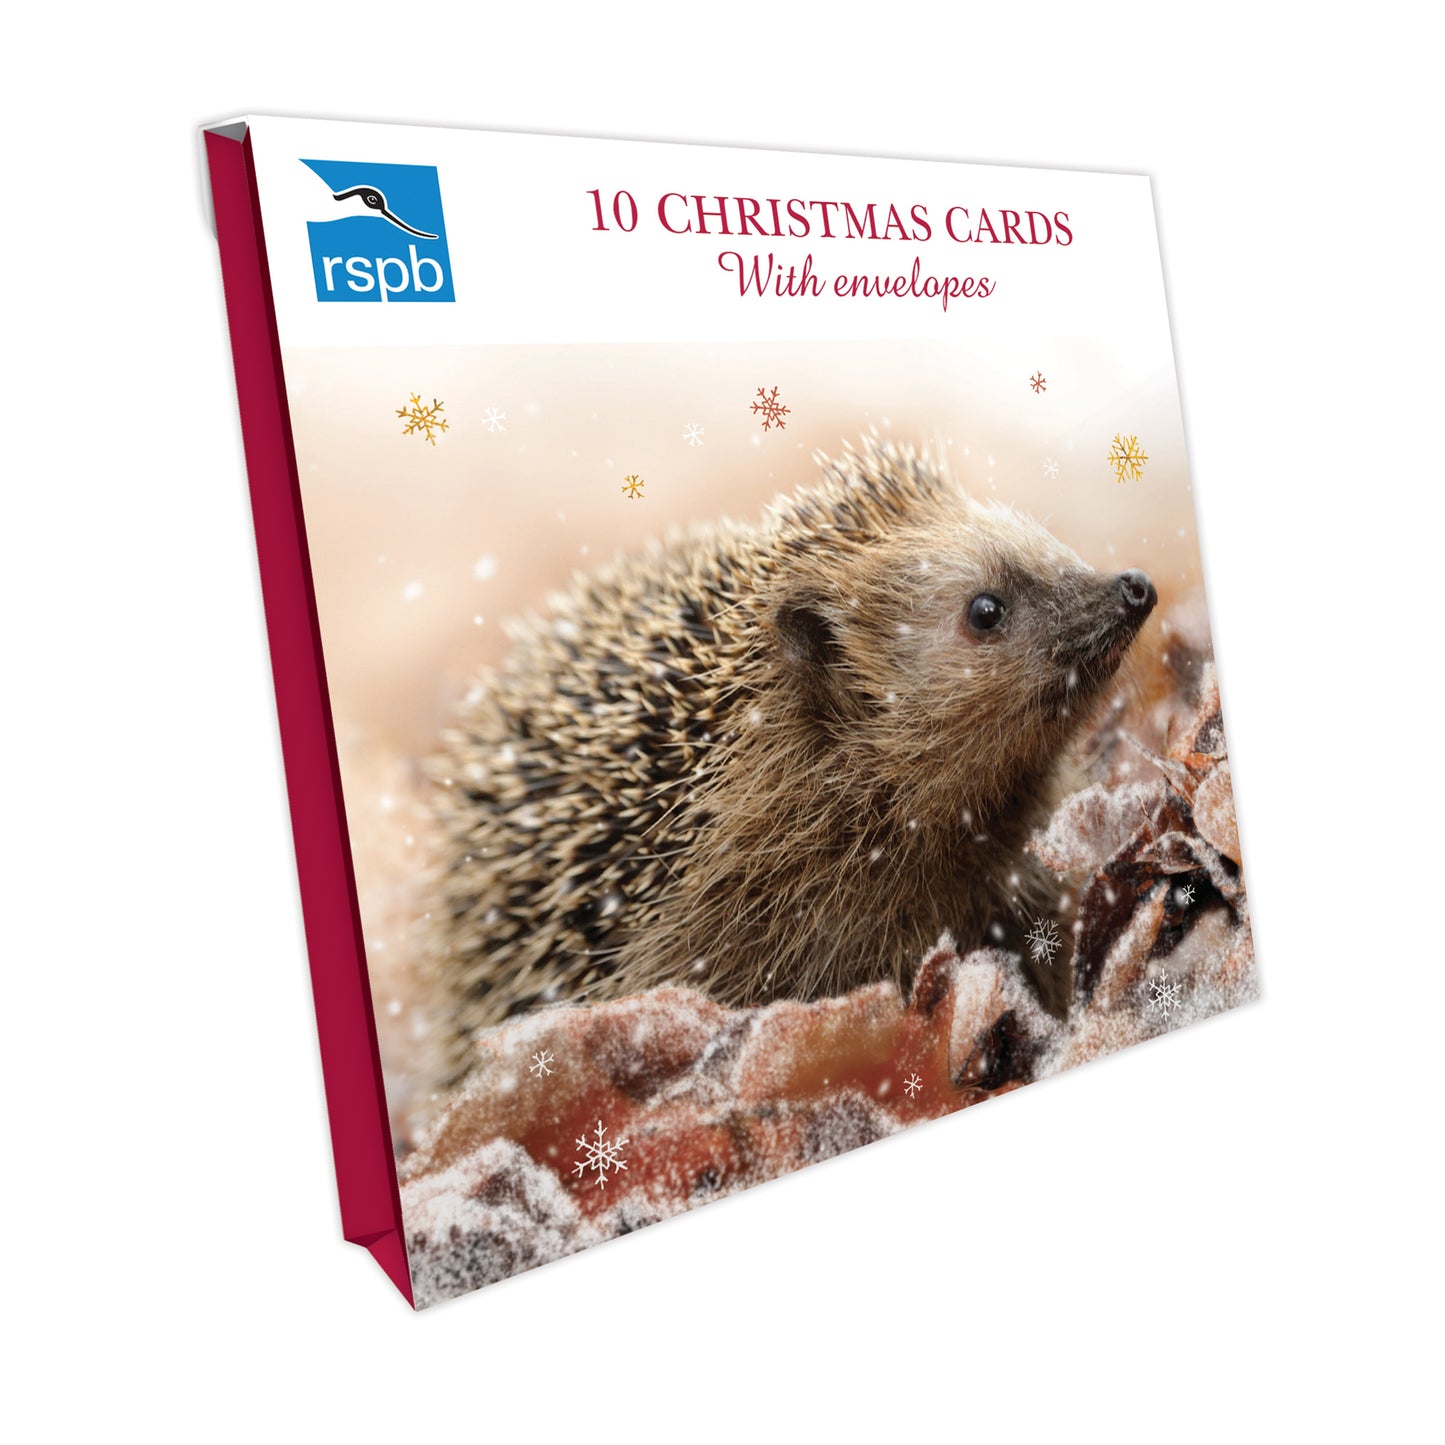 Hedgehog & Snowflakes - RSPB Small Square Christmas 10 Card Pack